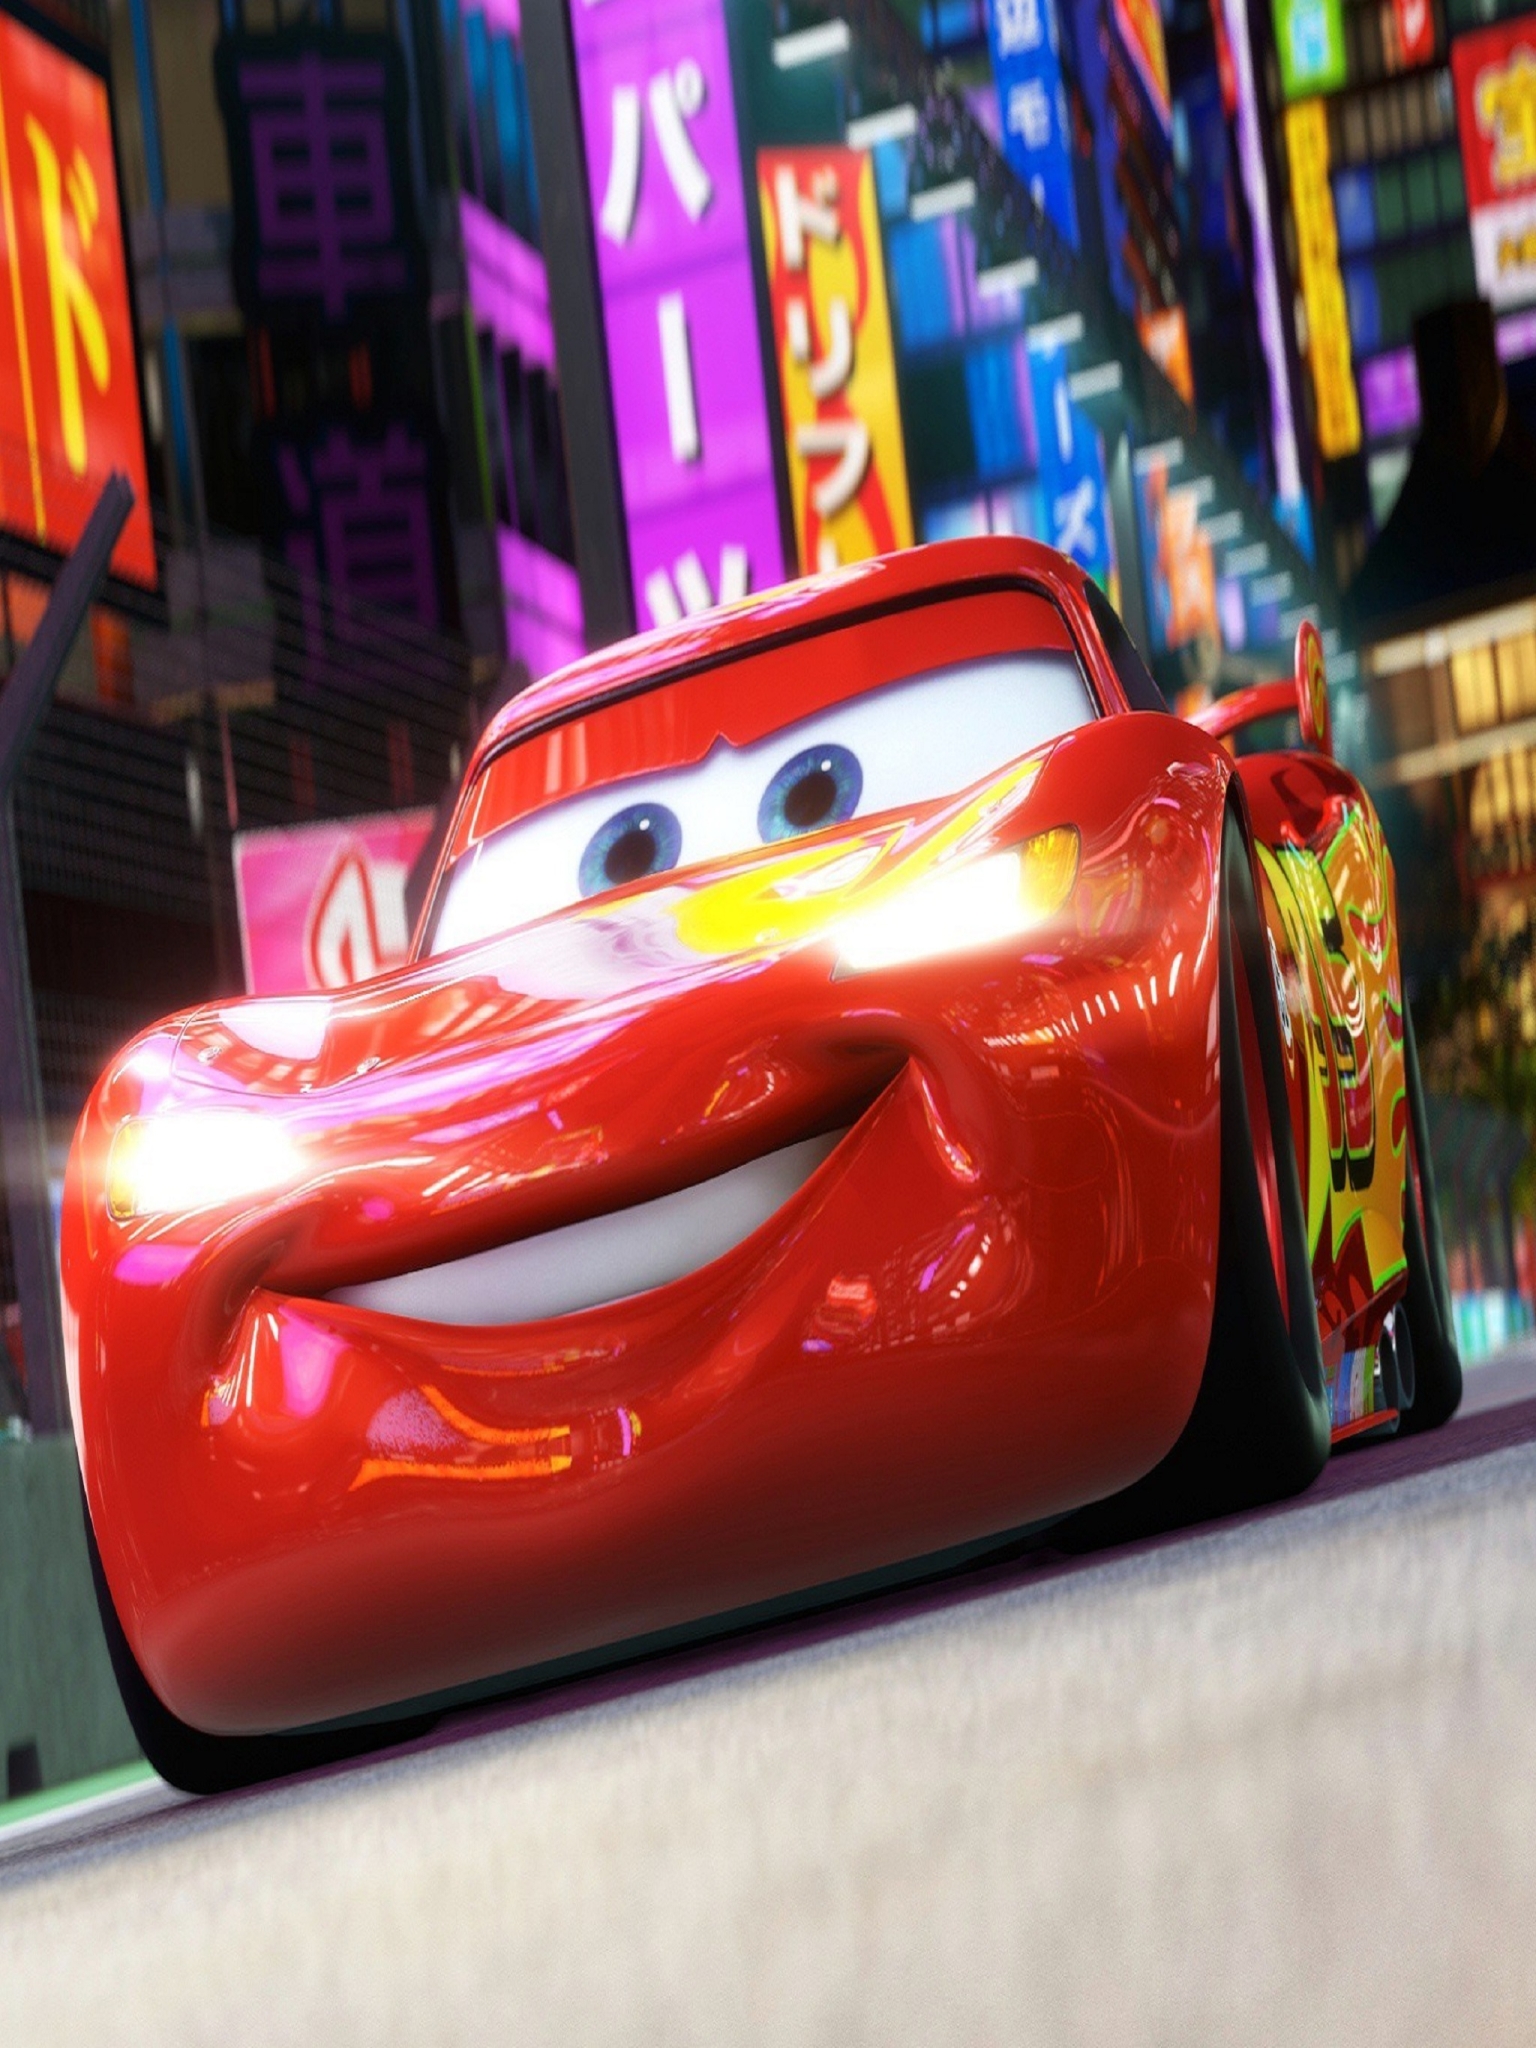 Cars 3 Movie for Apple iPad Air 2 resolution